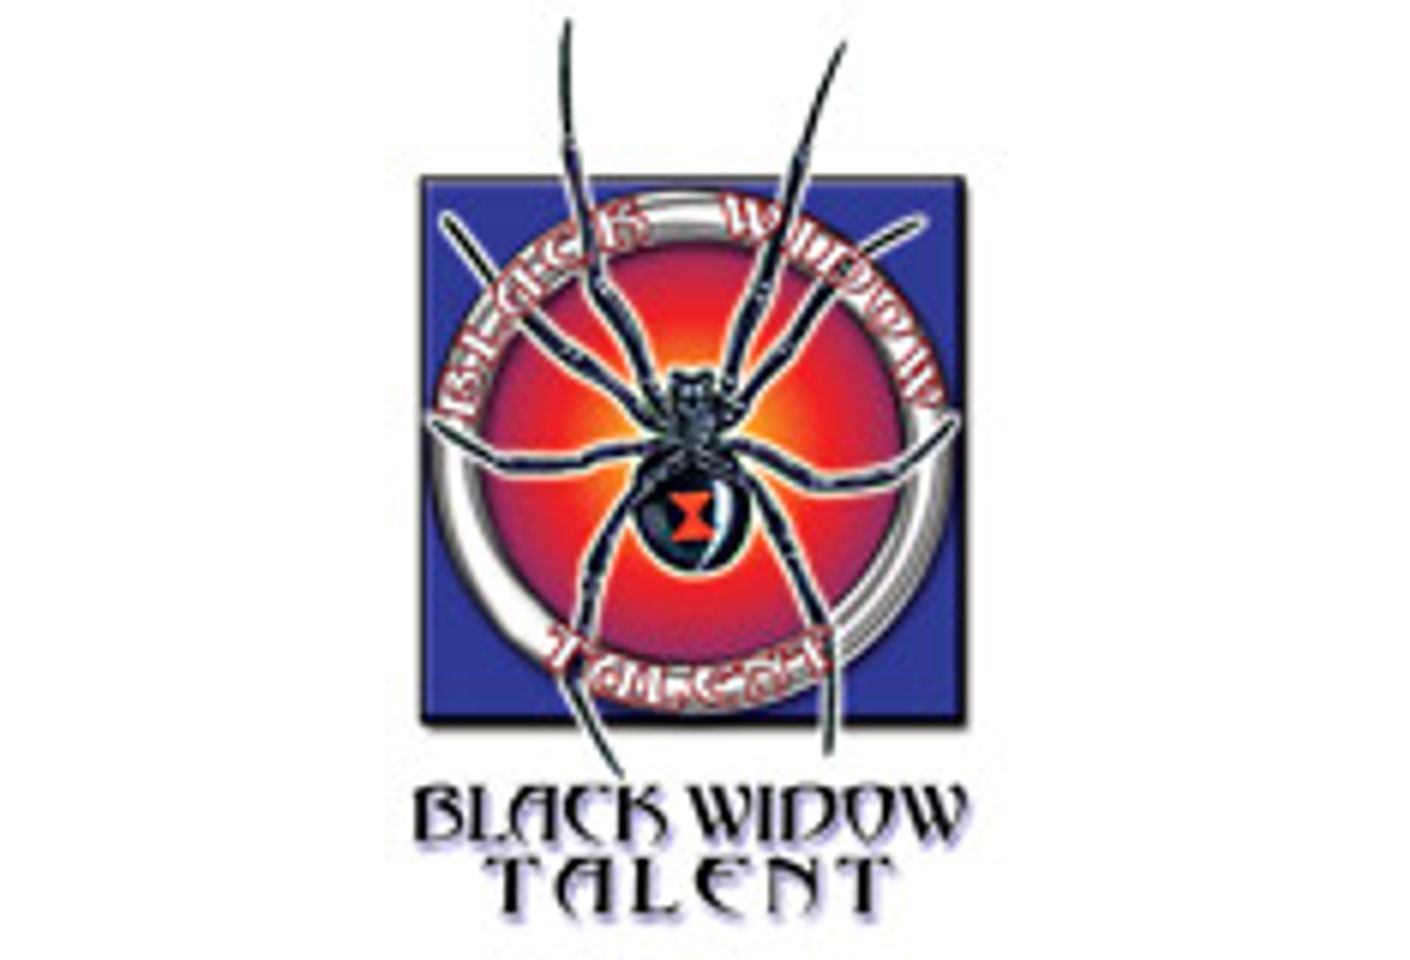 Black Widow Talent Receives State License